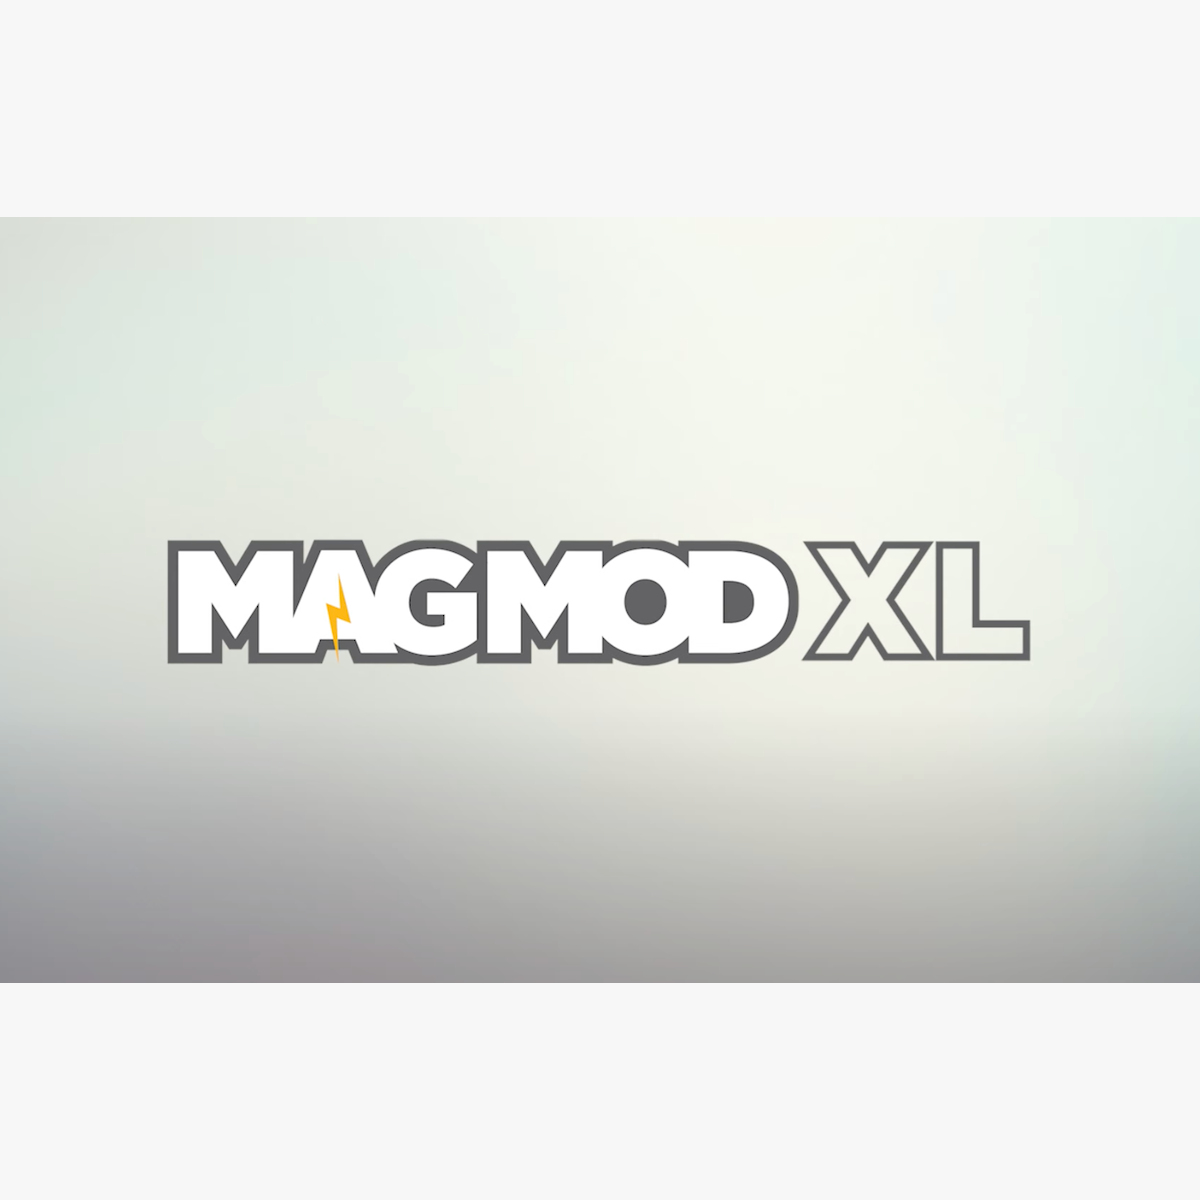 MagMod XL Pro Stroboskop Kit